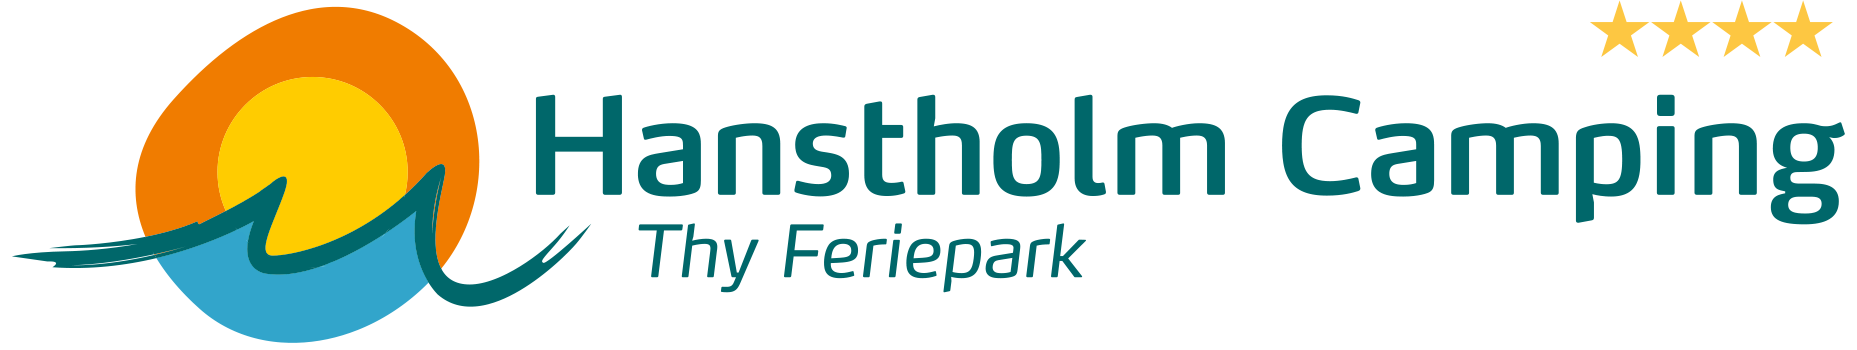 Hanstholm Camping - Thy Feriepark